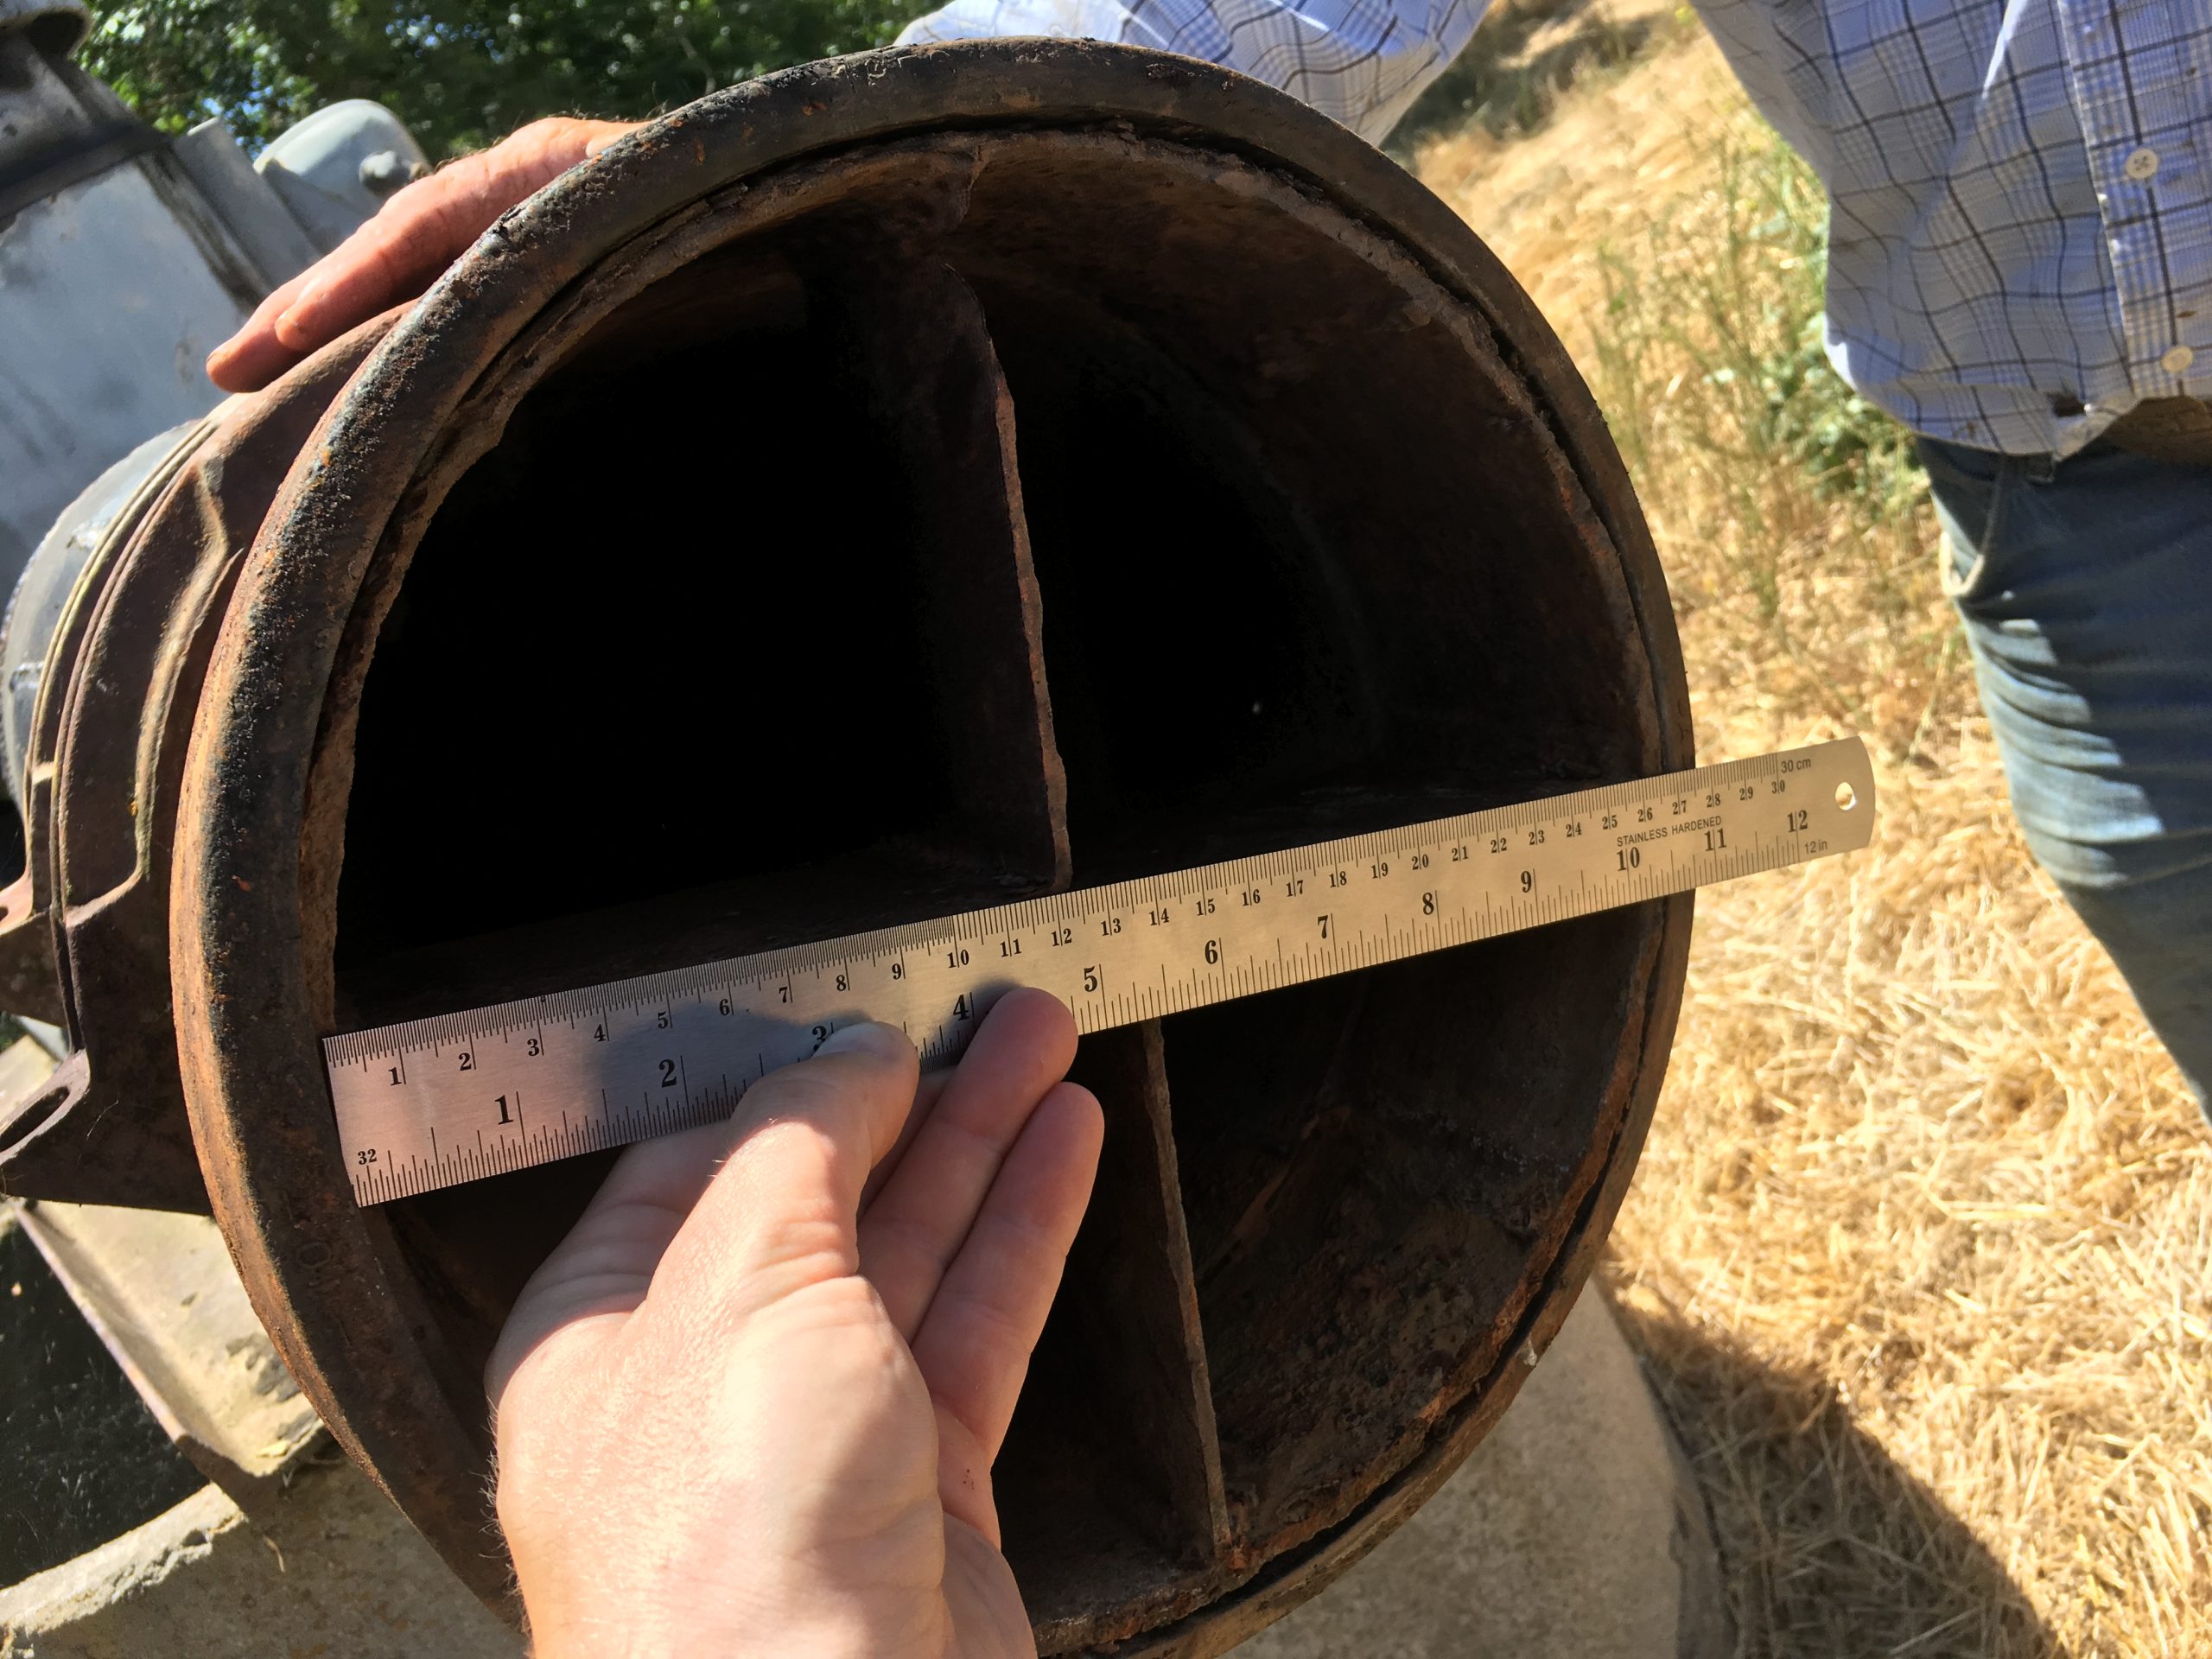 Measuring pipe diameter and straightening vane depth to ahead of upgrades.